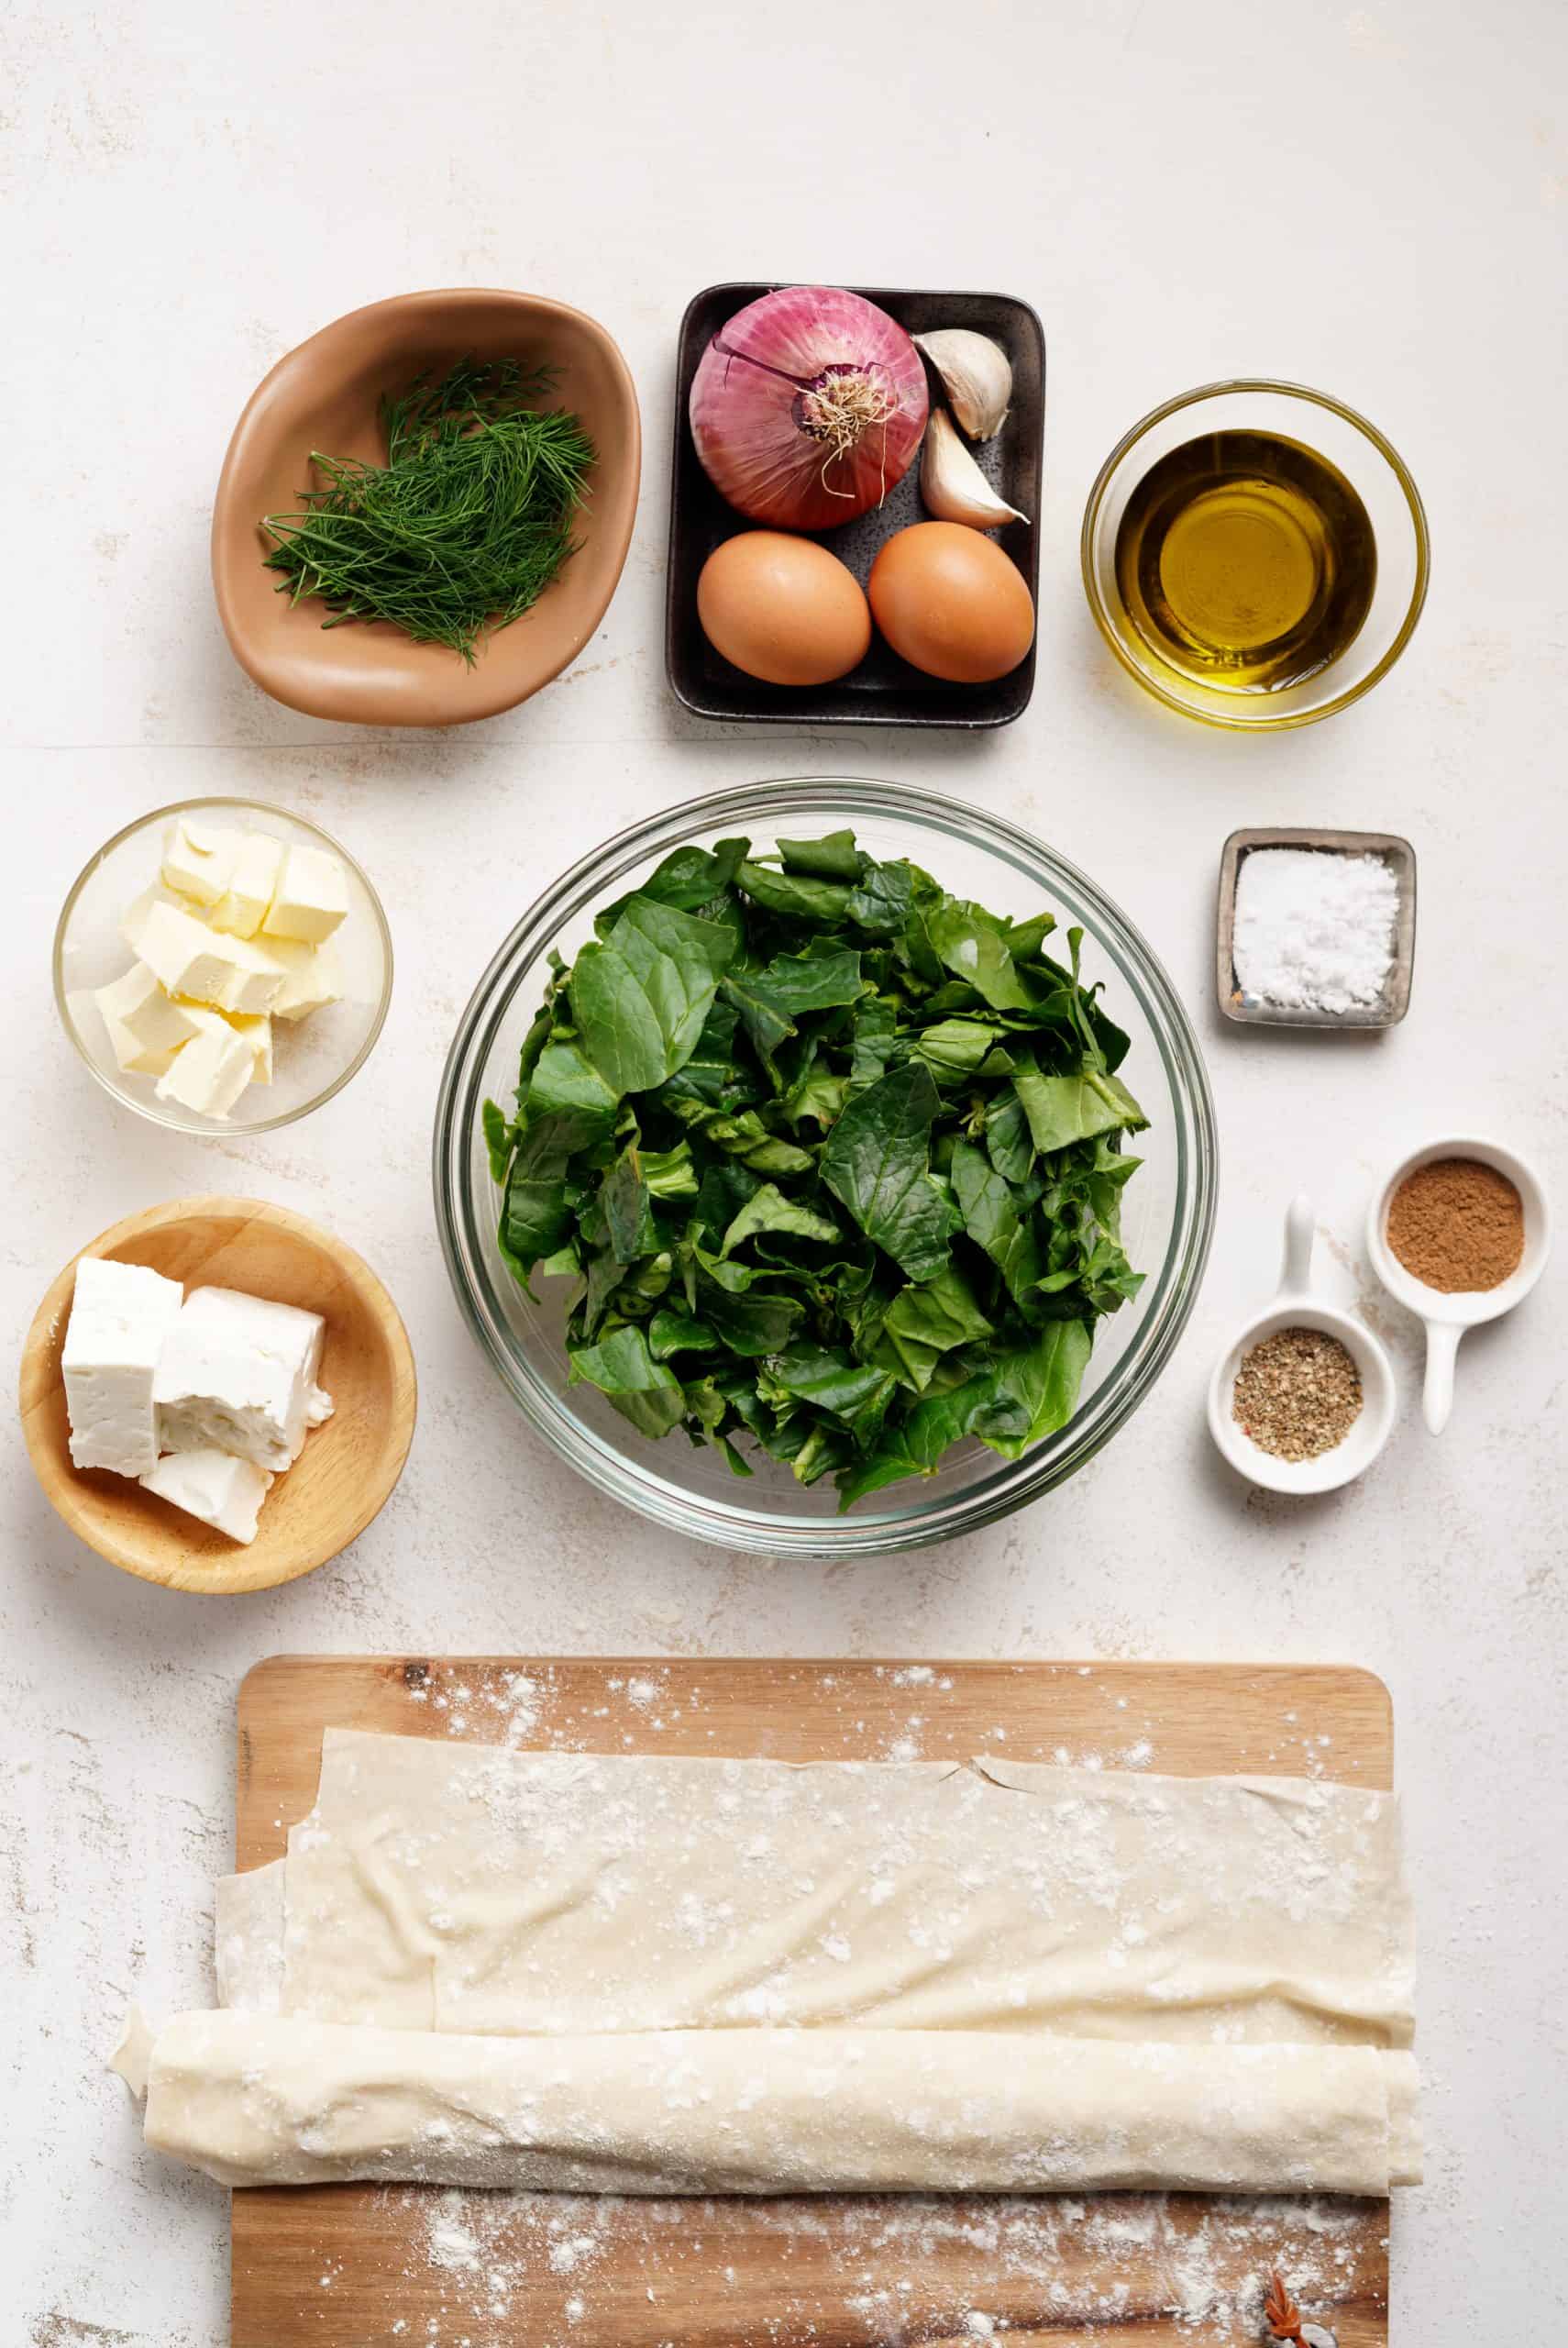 Mini Spanakopita Triangles Recipe (Spanakopitakia - Greek spinach triangles) ingredients